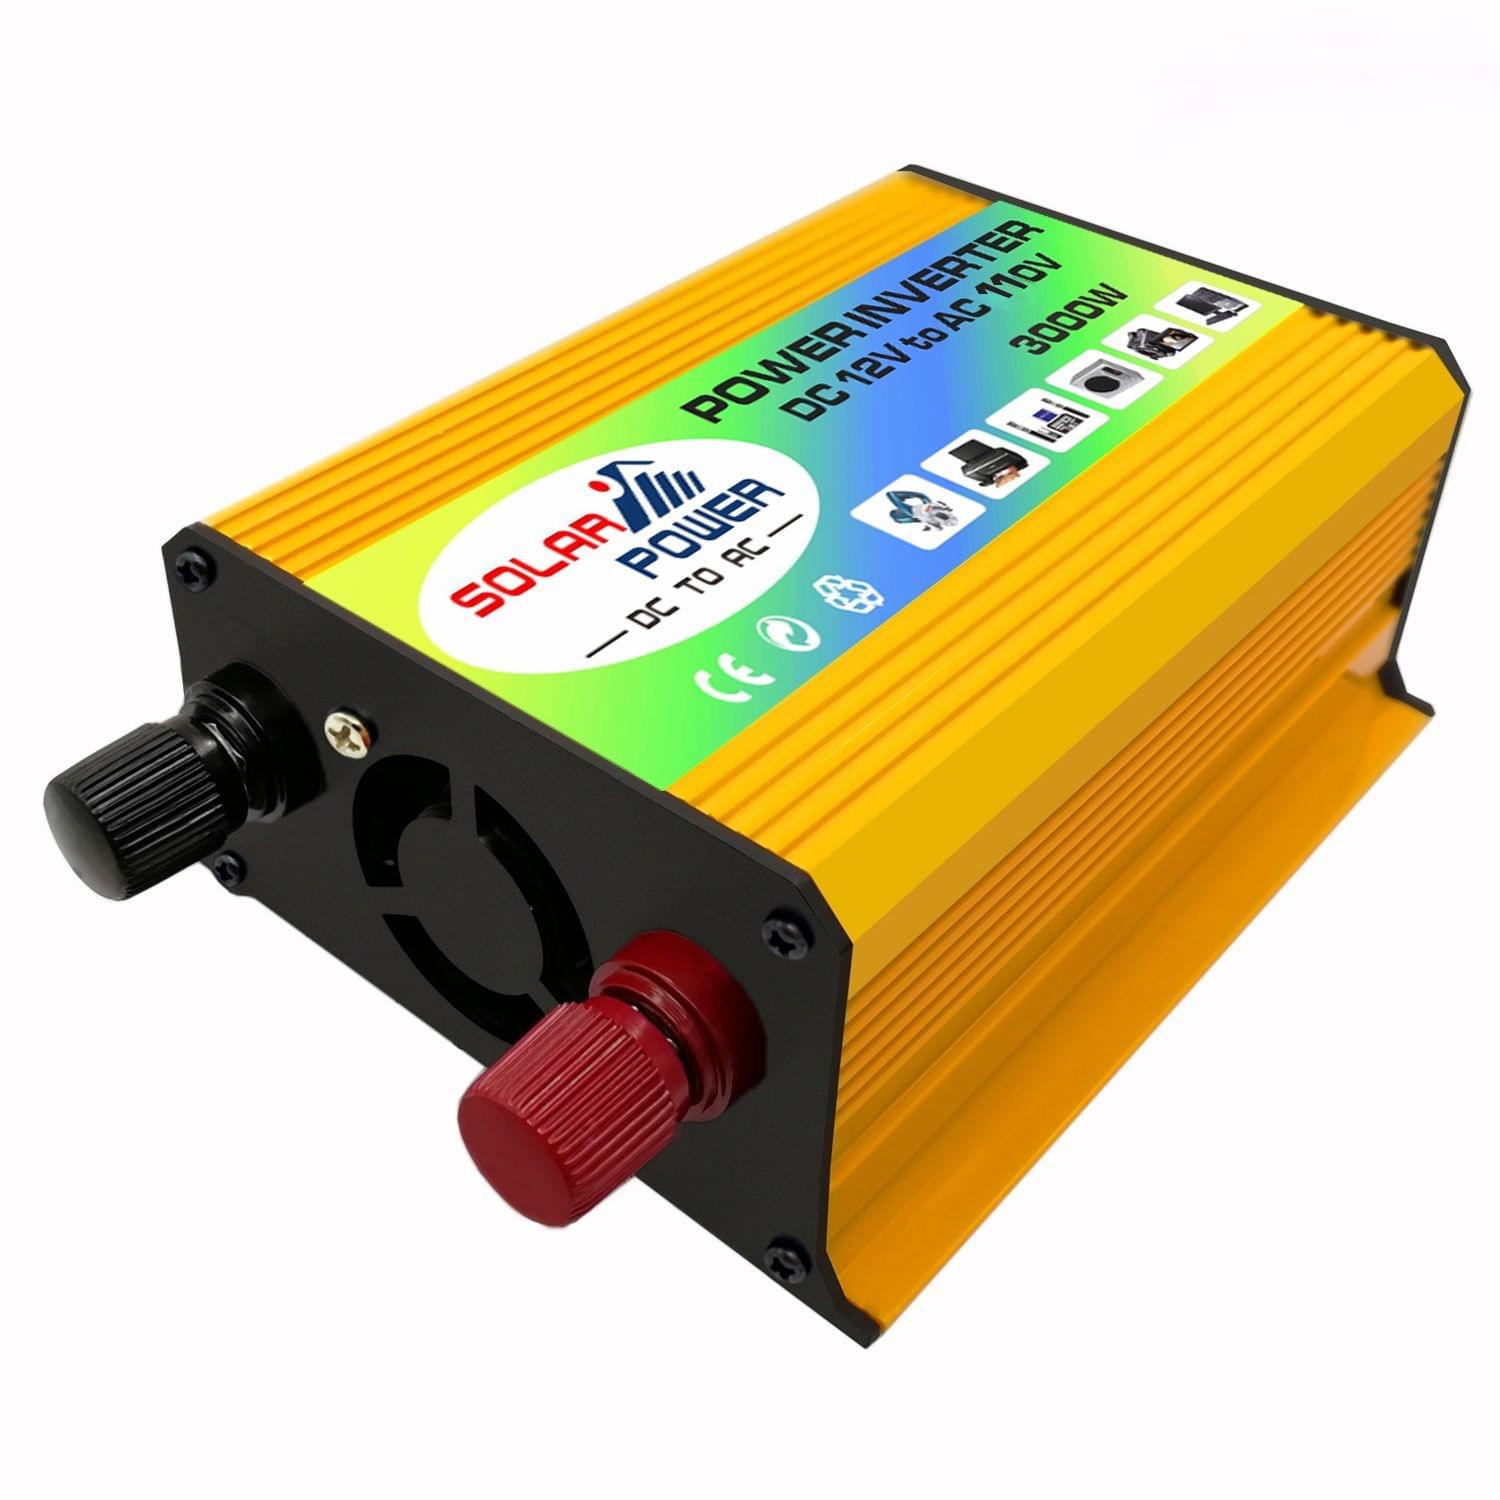 Peaks Power 3000W Modified Sine Wave Inverter High Frequency - 220V (Black)